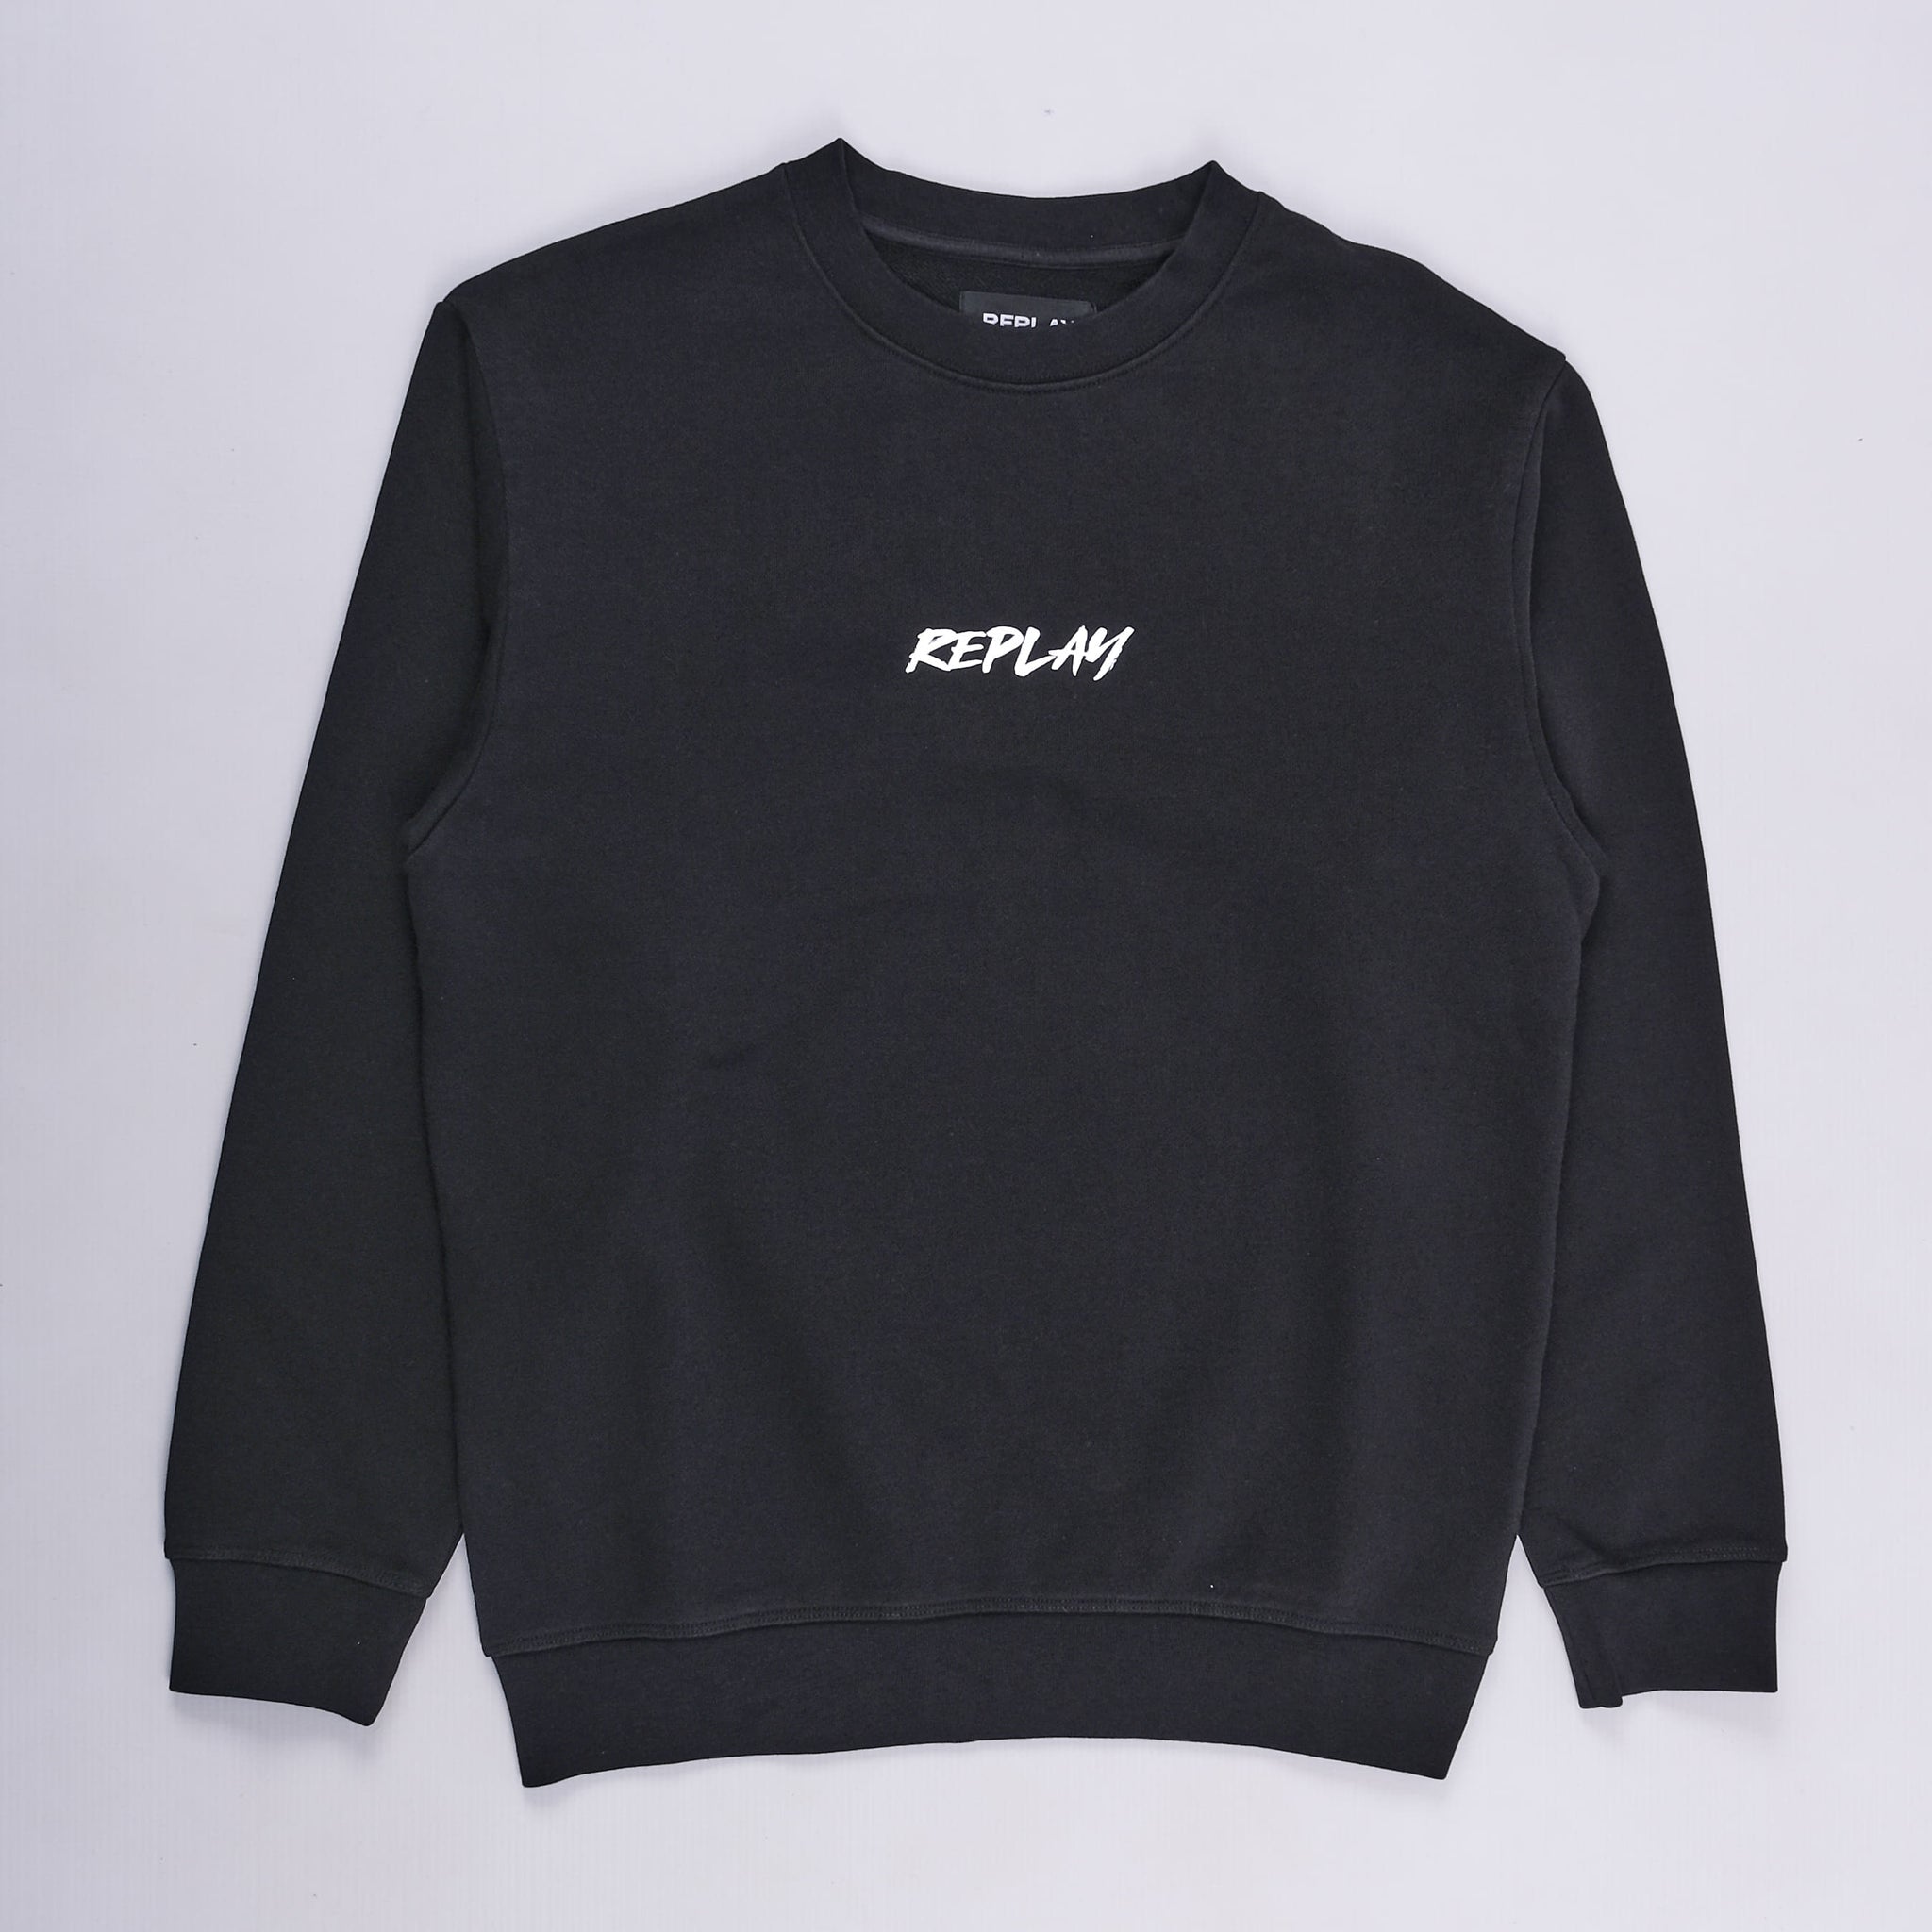 Ever Winner Sweater (Black)